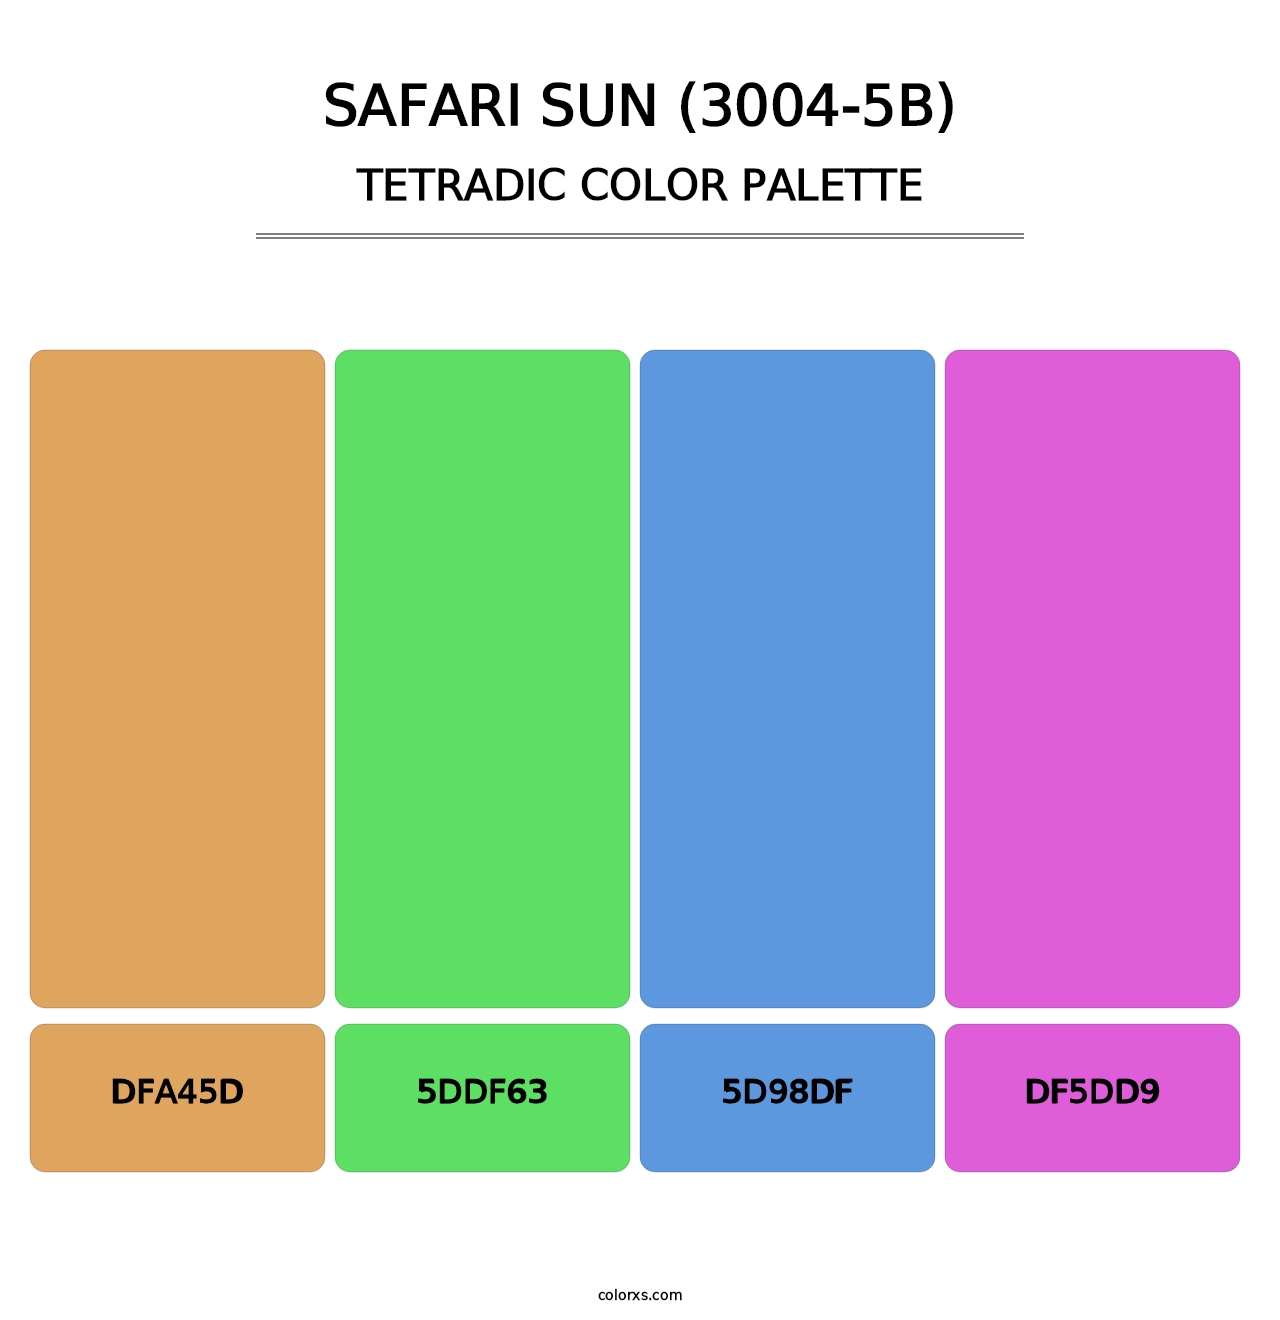 Safari Sun (3004-5B) - Tetradic Color Palette